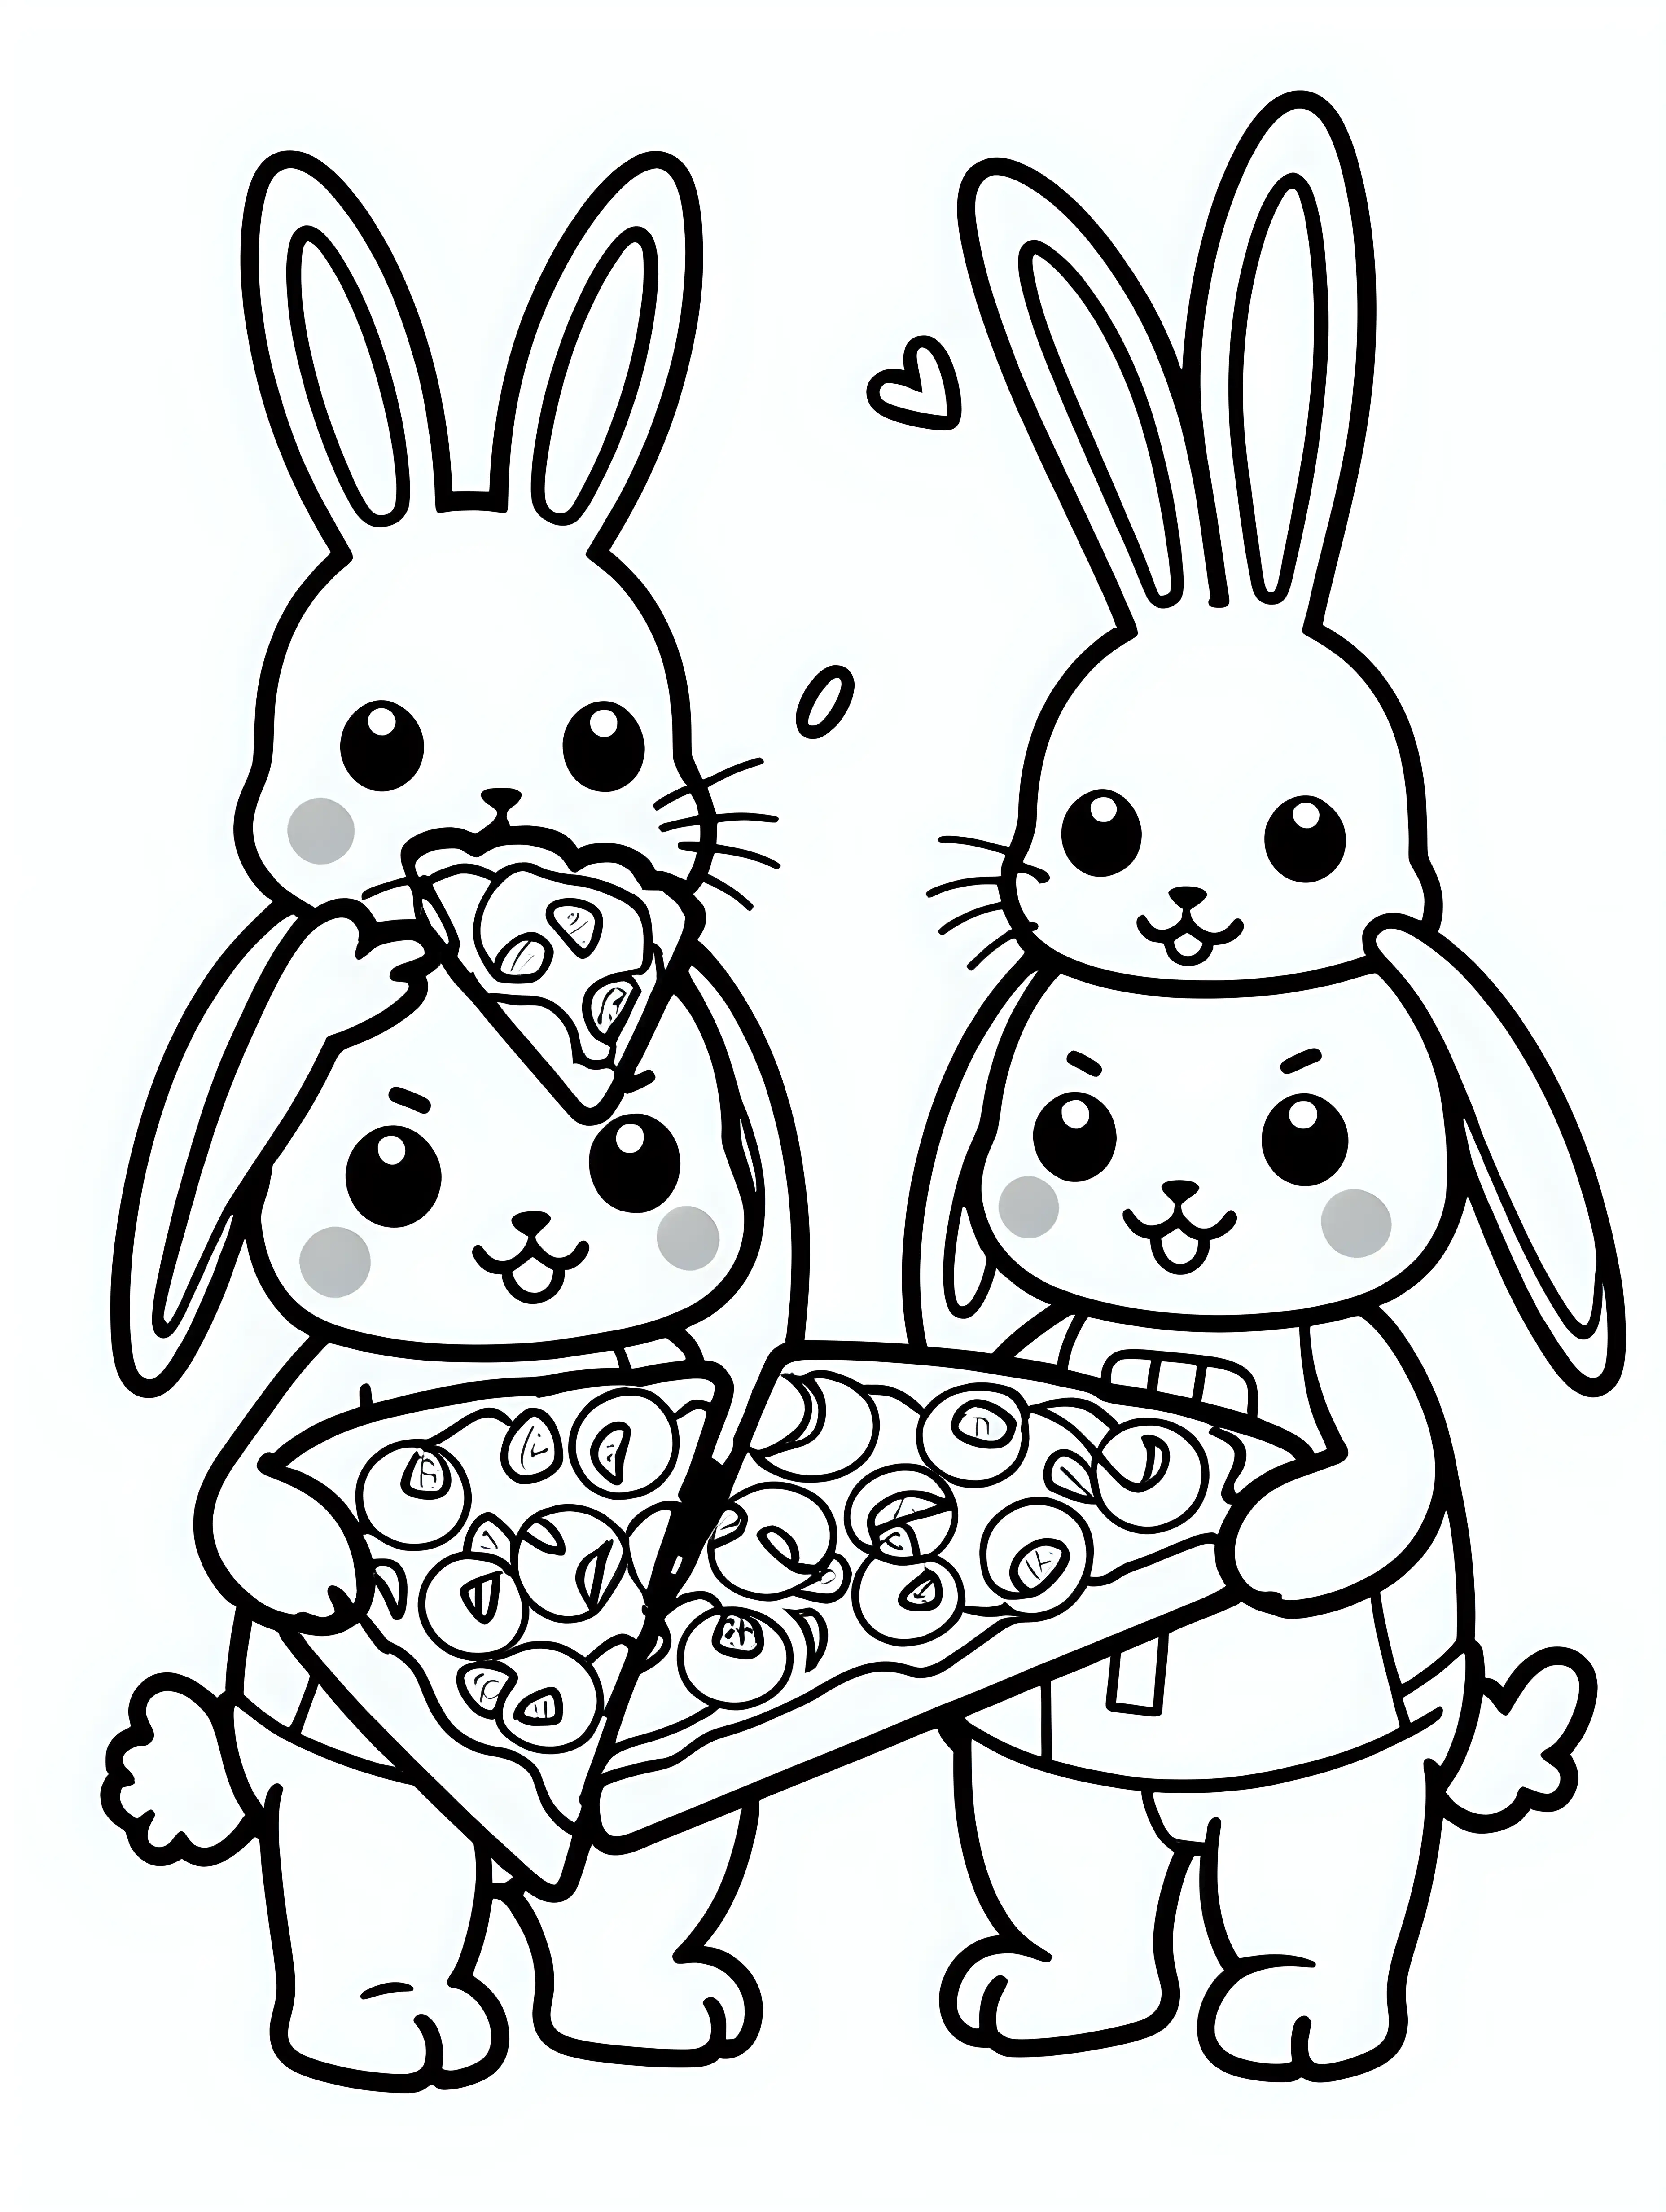 Adorable Kawaii Bunnies Enjoying Pizza Coloring Page for Kids